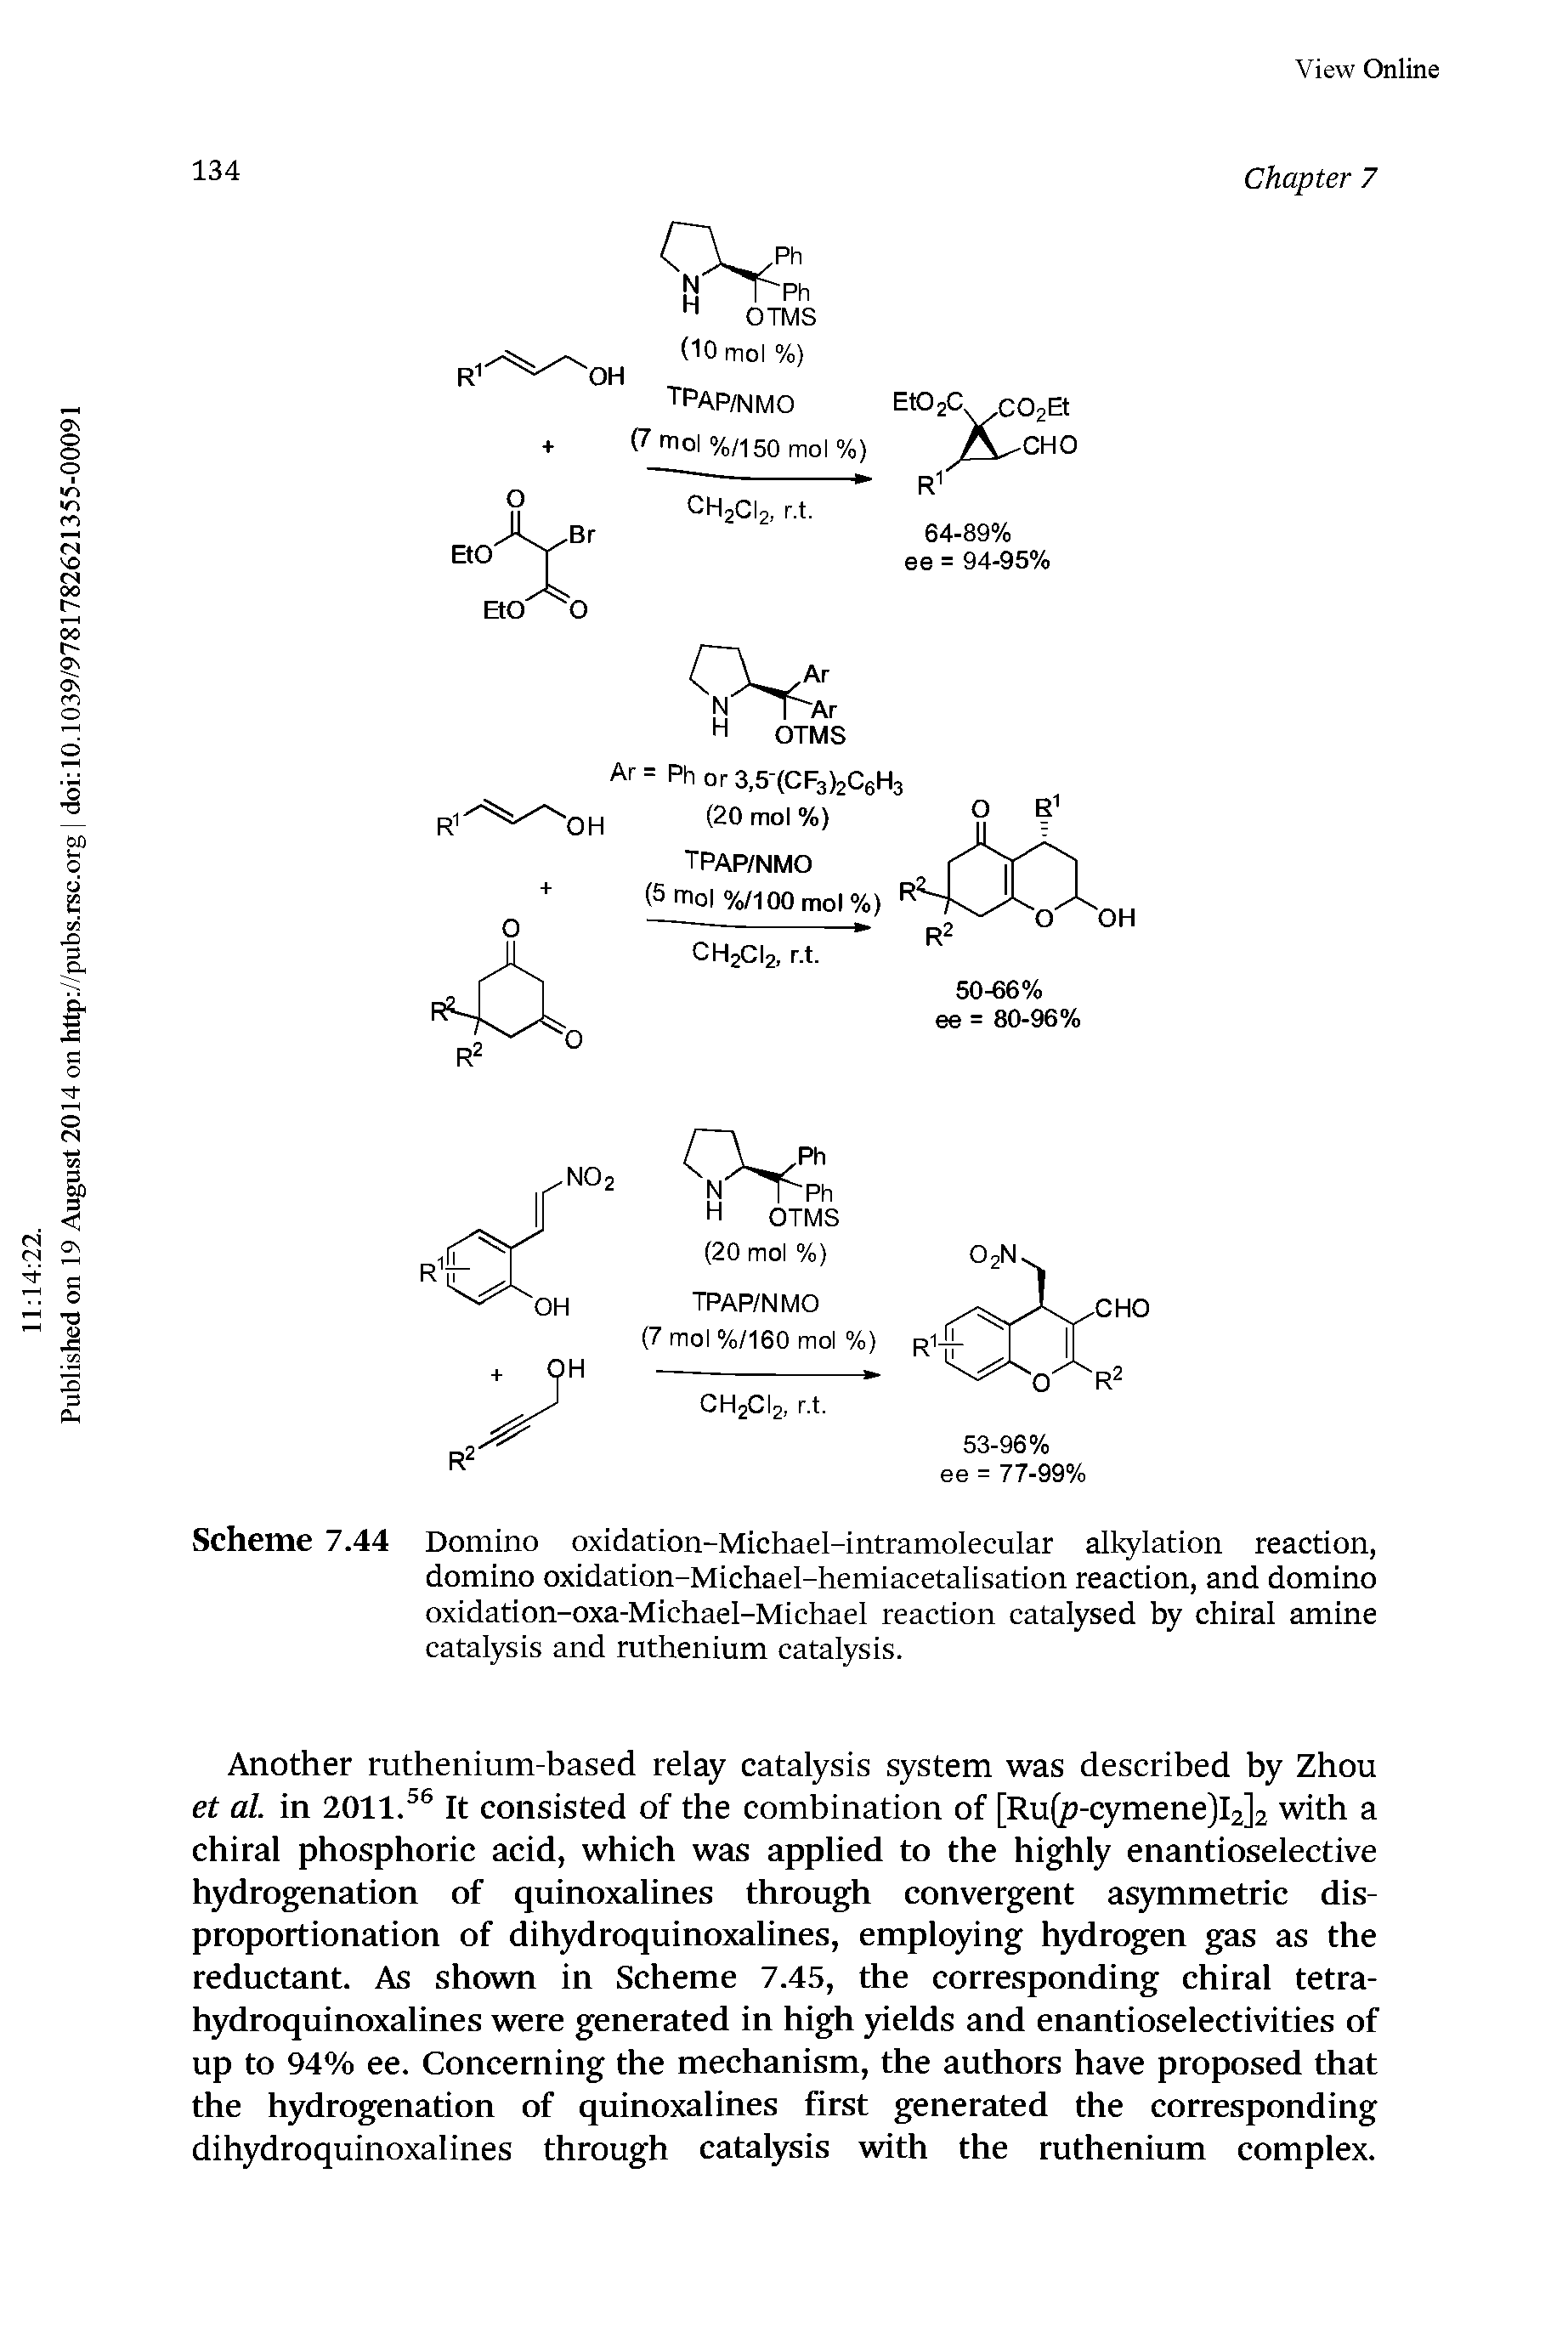 Scheme 7.44 Domino oxidation-Michael-intramolecular alkylation reaction, domino oxidation-Michael-hemiacetalisation reaction, and domino oxidation-oxa-Michael-Michael reaction catalysed by chiral amine catalysis and ruthenium catalysis.